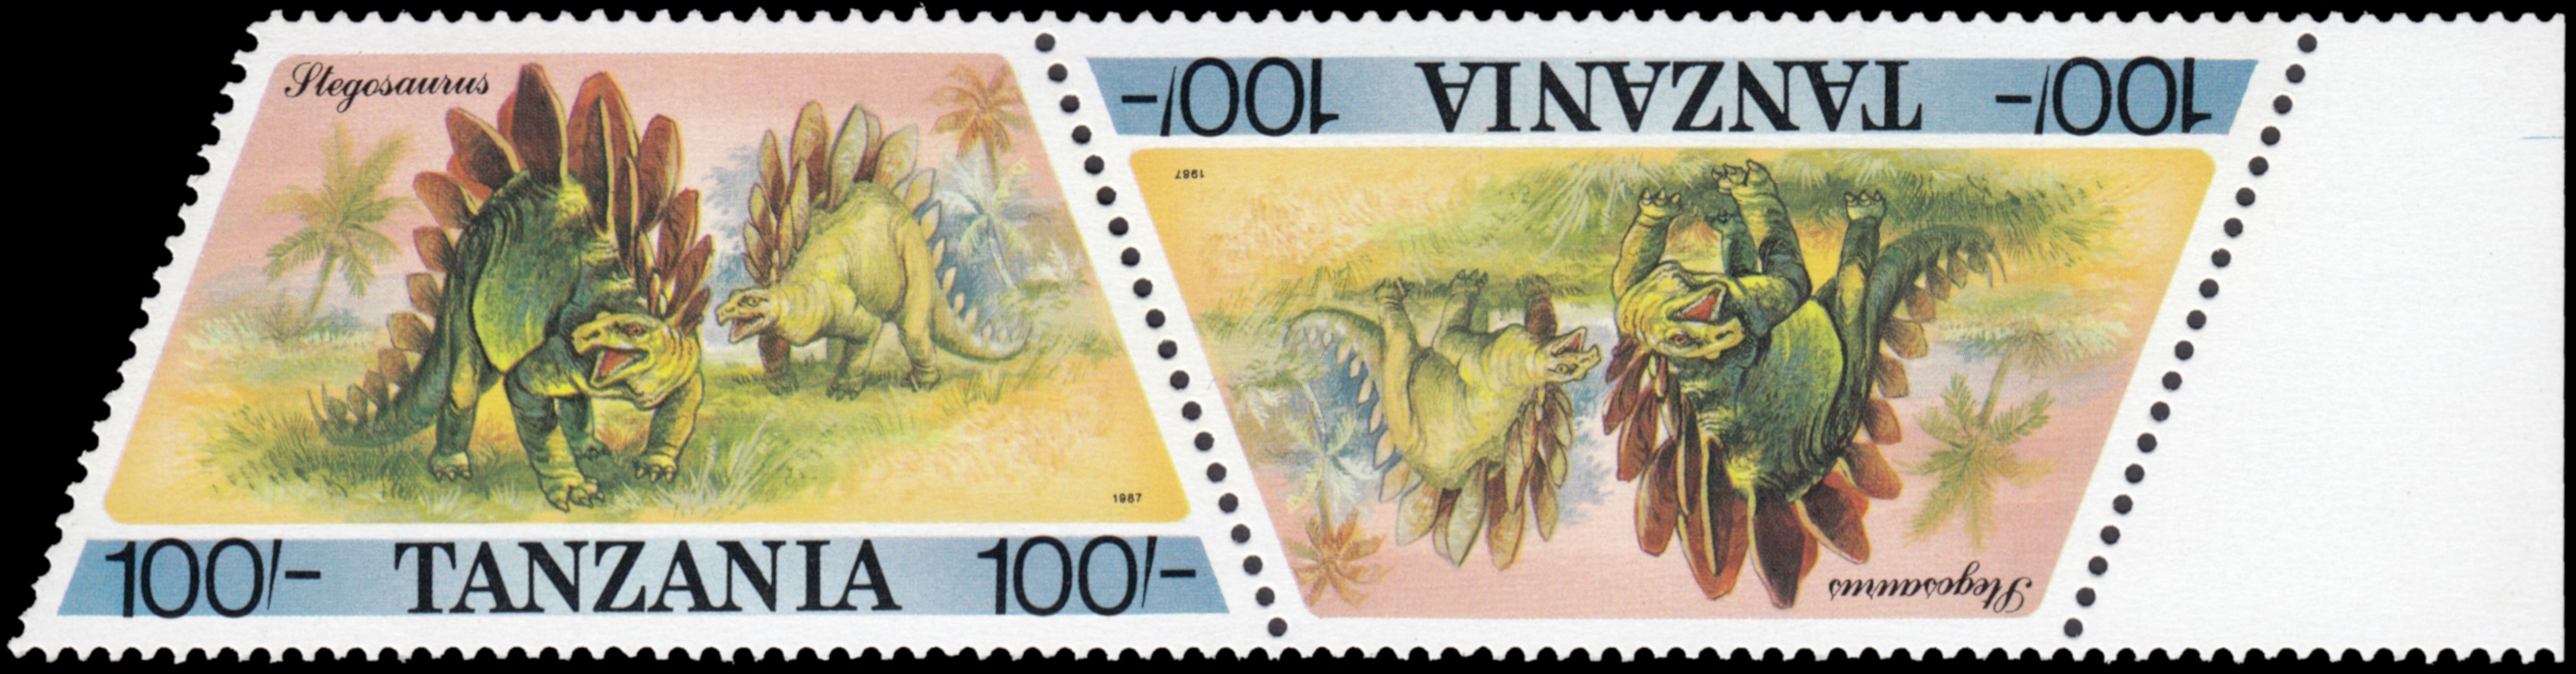 Stegosaurus dinosaur on stamps of Tanzania 1988